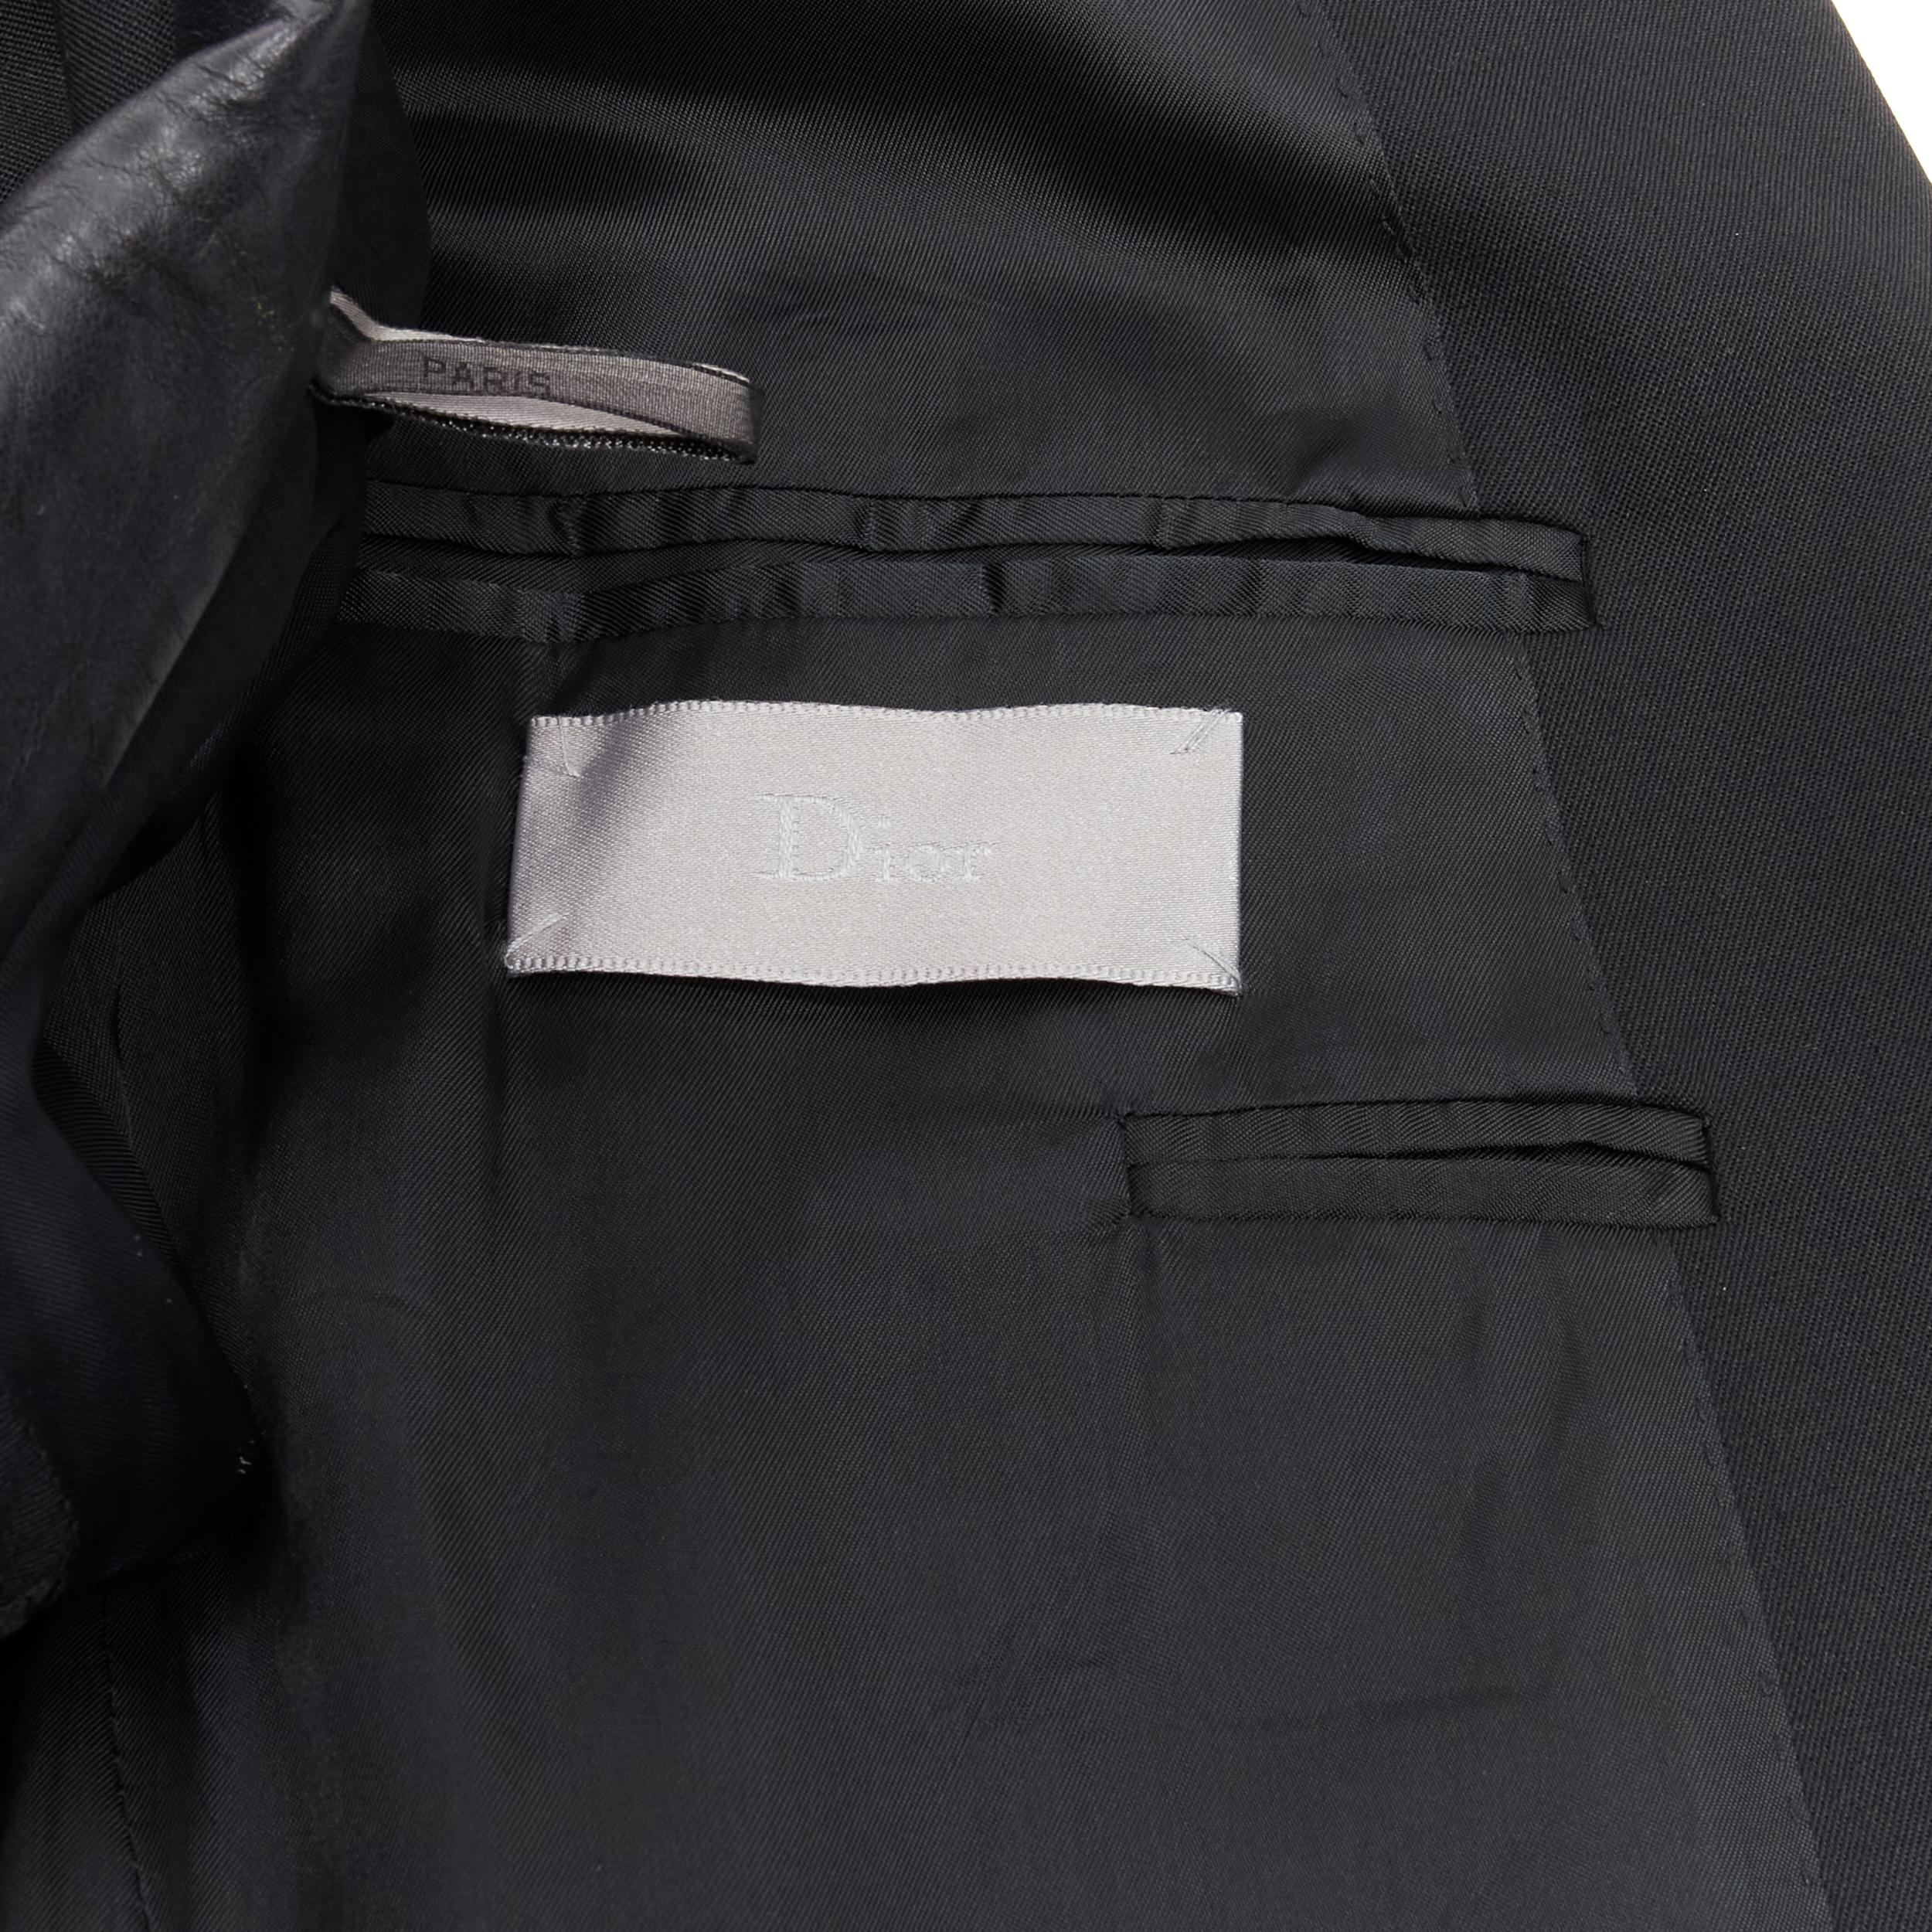 DIOR HOMME Hedi Slimane leather collar classic 2-button blazer jacket FR46 S 6